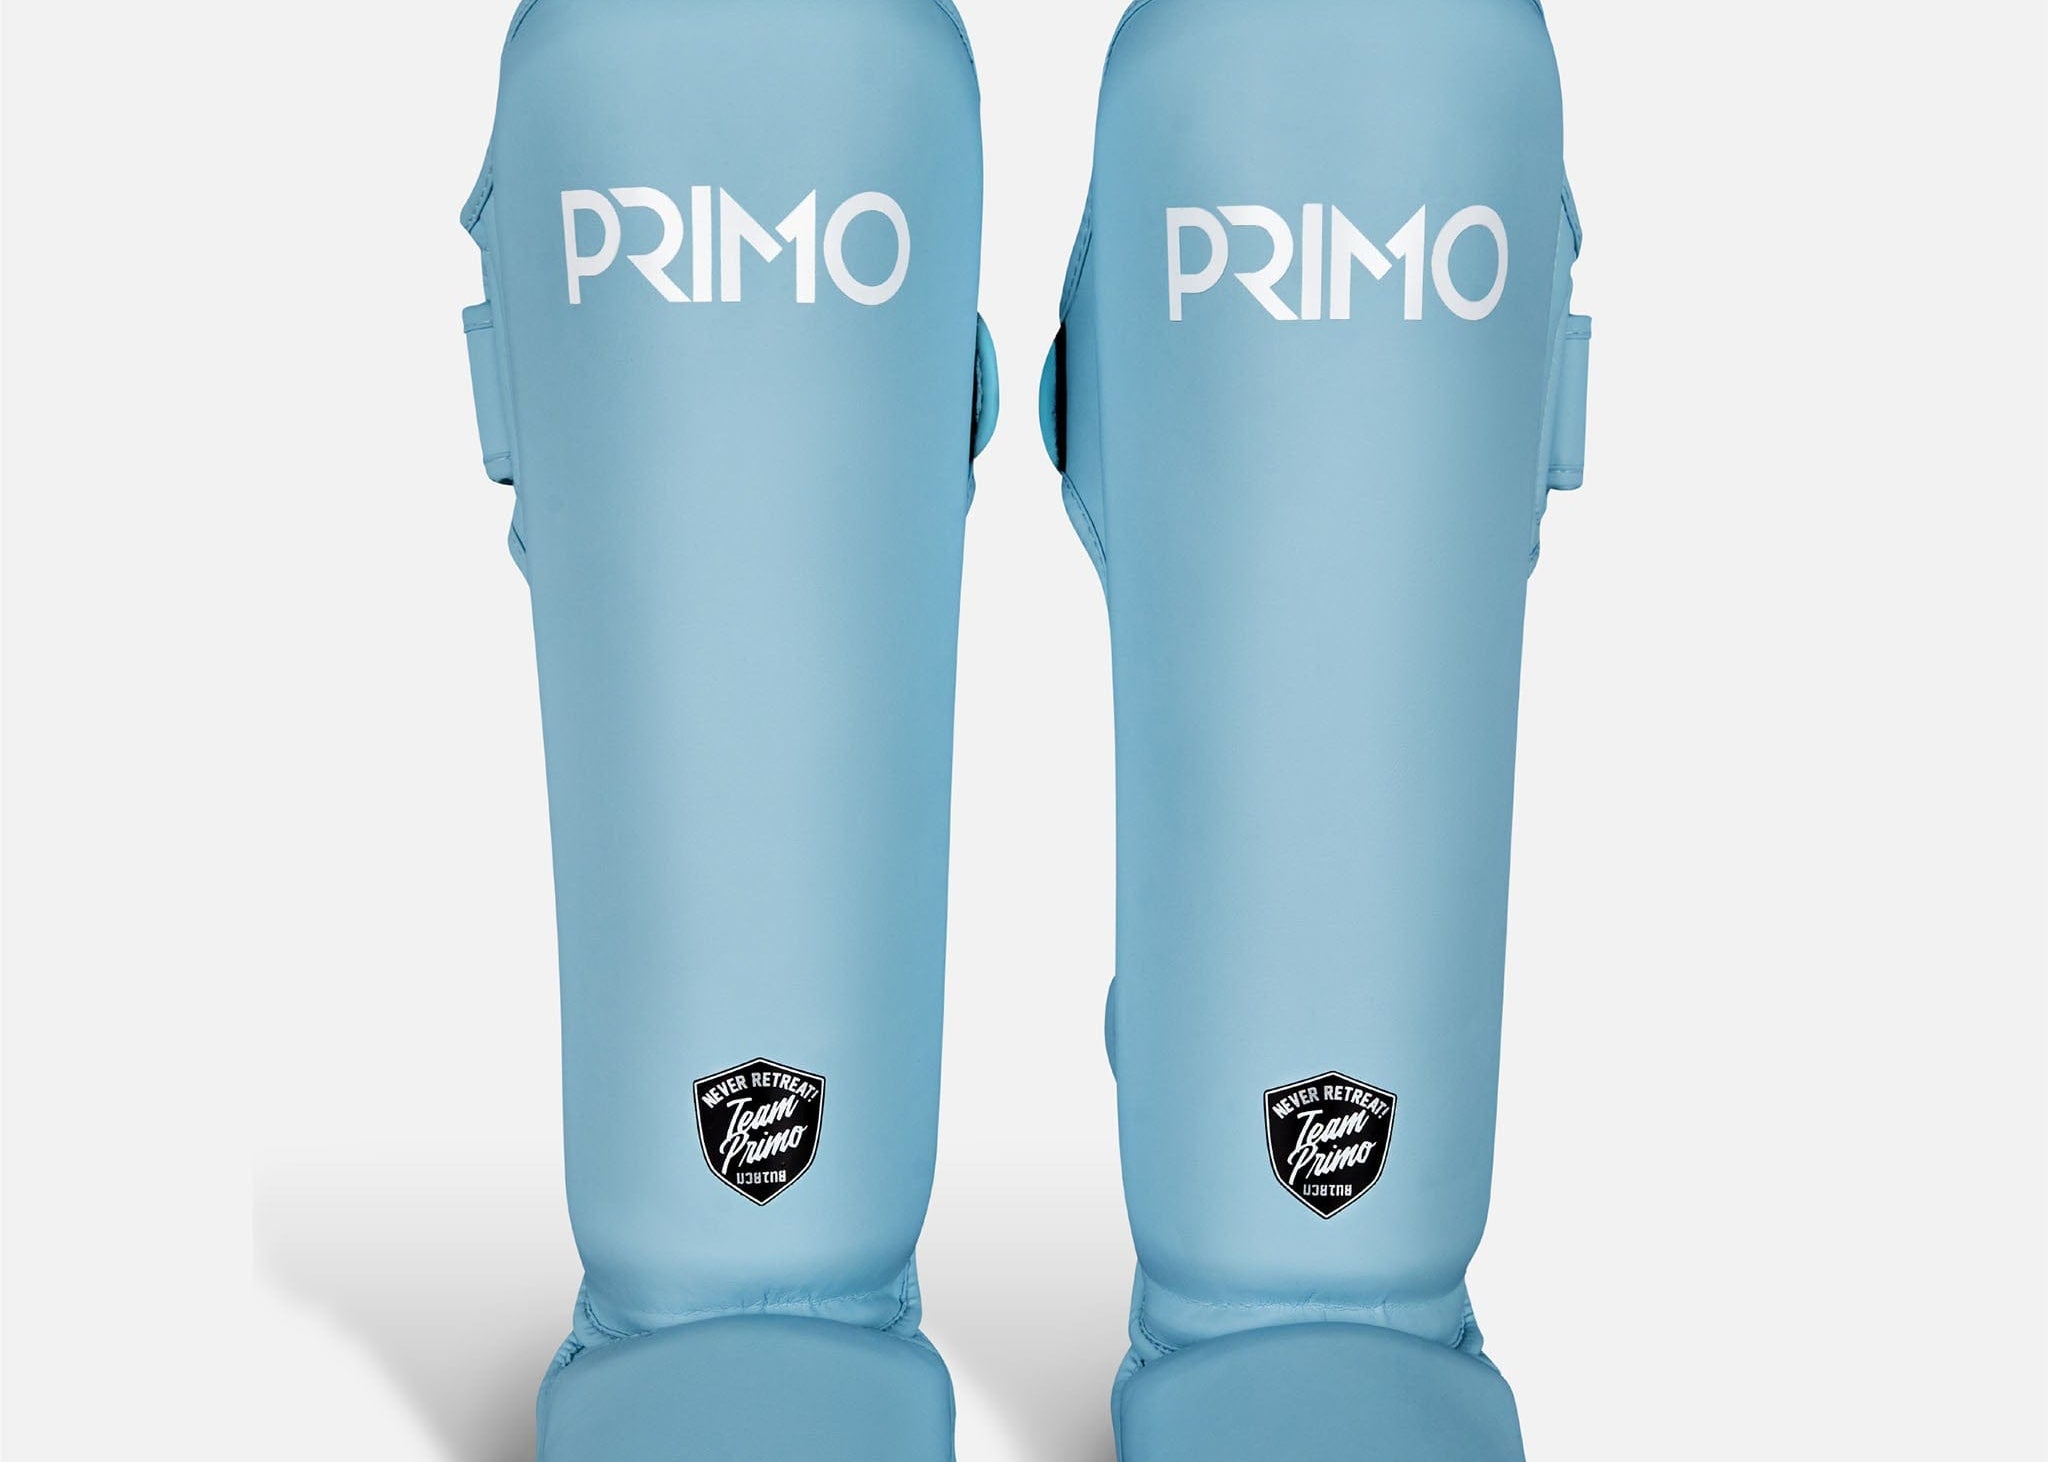 Primo Fight Wear Official Classic Muay Thai Shinguard - Arctic Blue